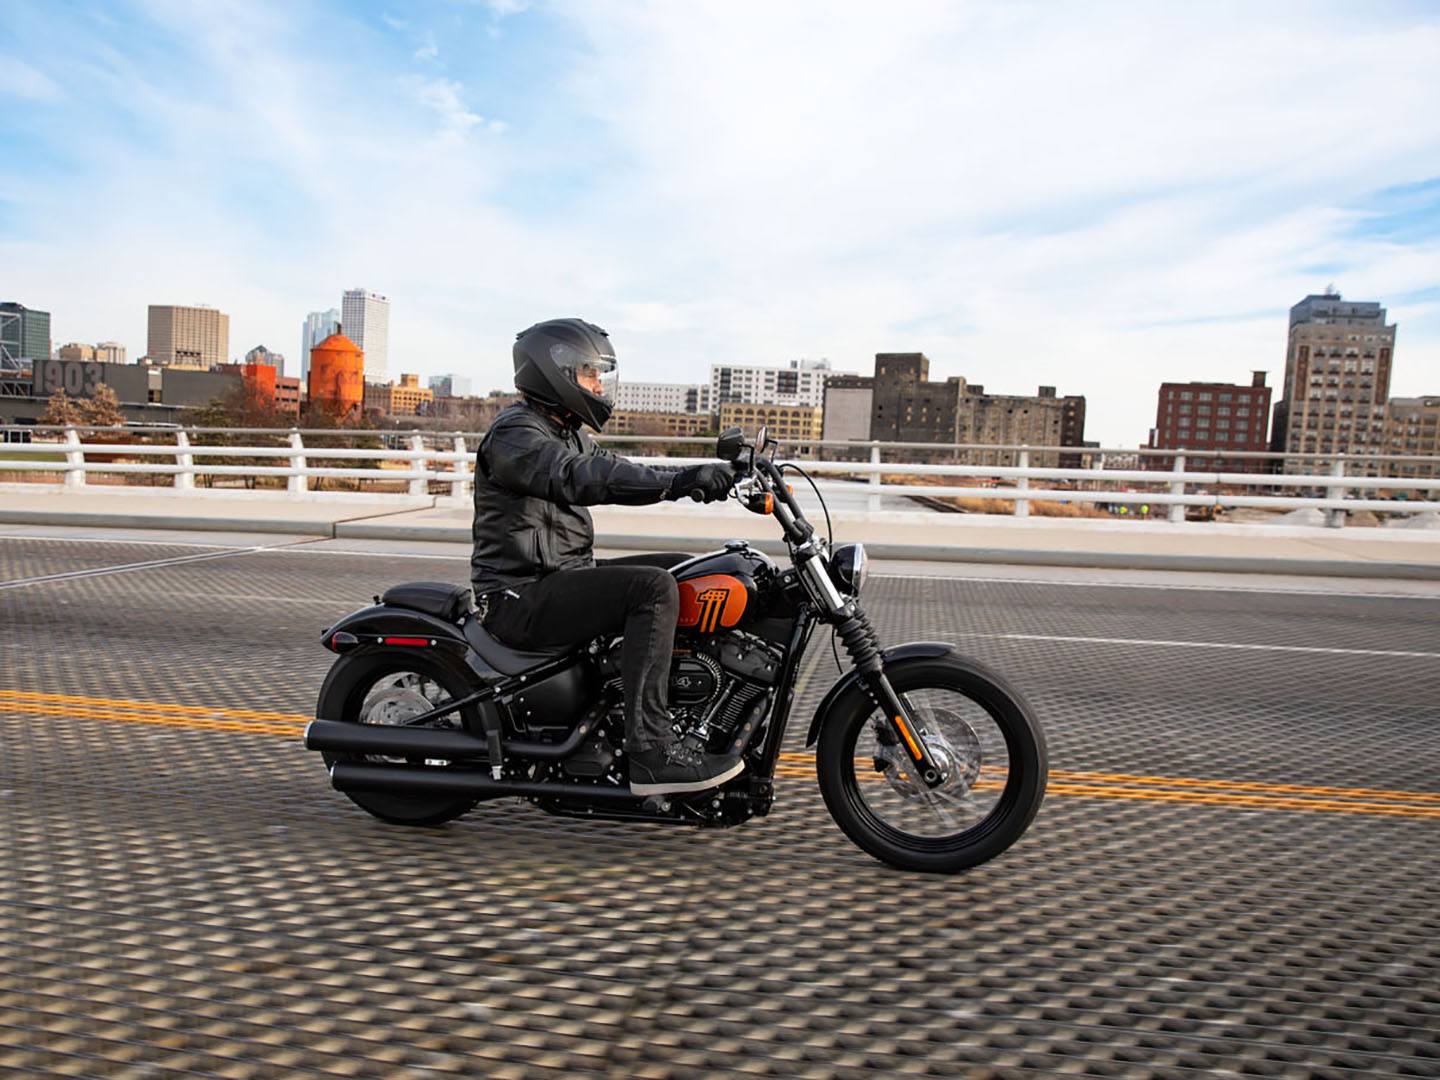 2021 Harley-Davidson Street Bob® 114 in Morgantown, West Virginia - Photo 8